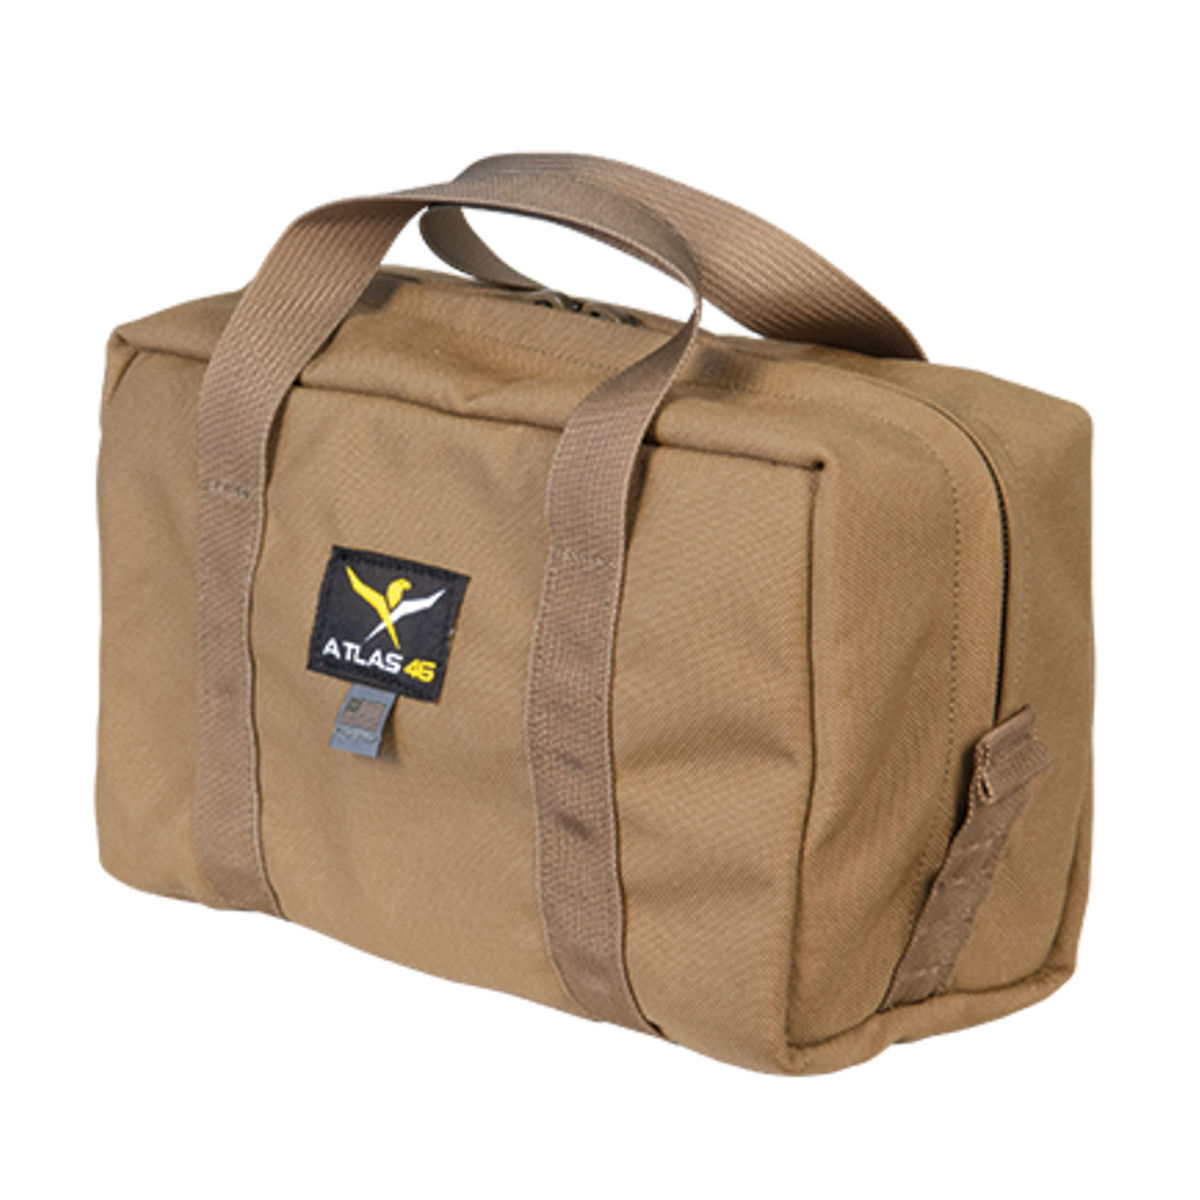 Atlas 46 Gear Carry Bag - Medium